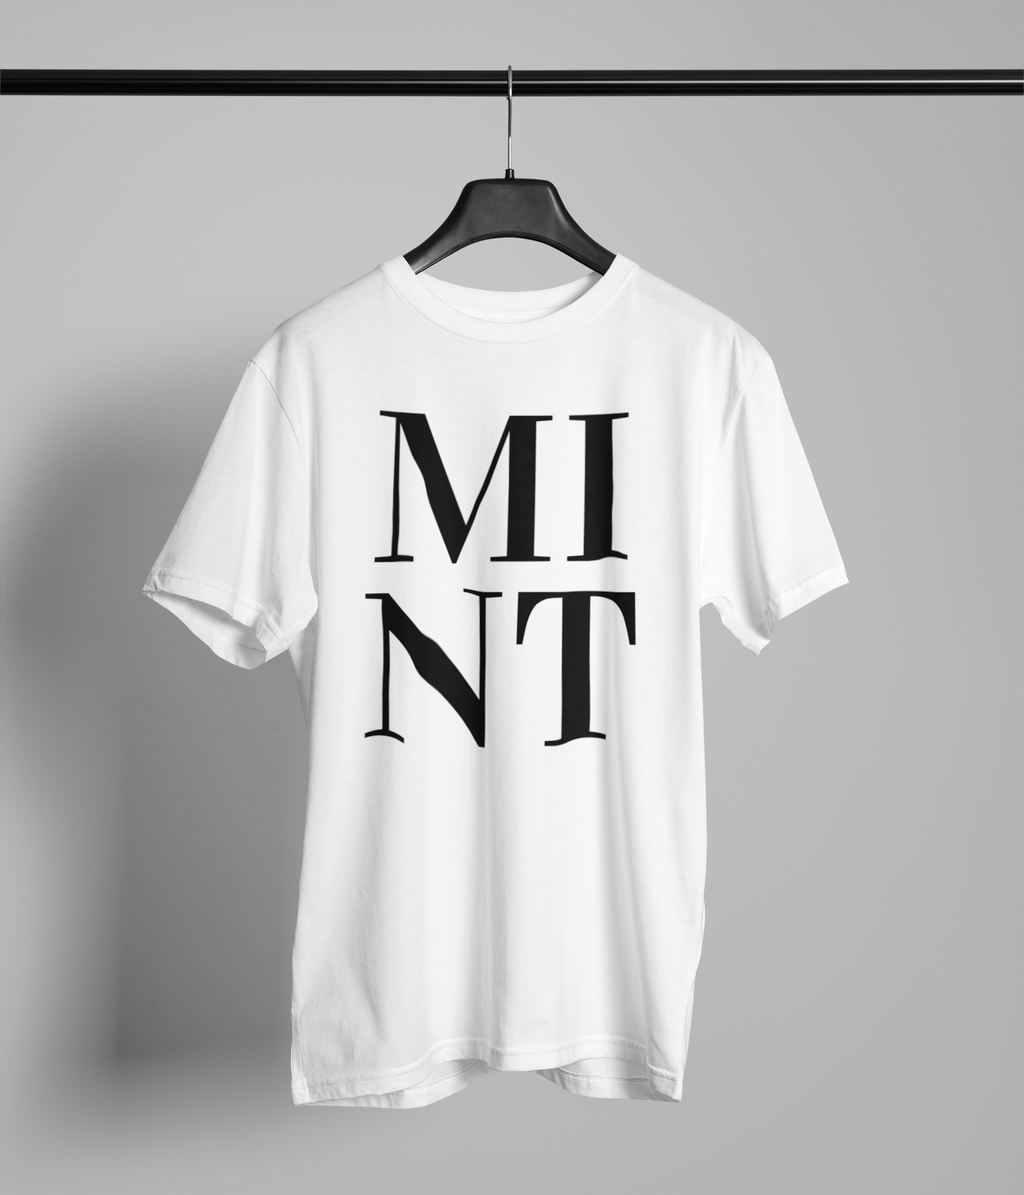 MINT Northern Slang T-Shirt Unisex